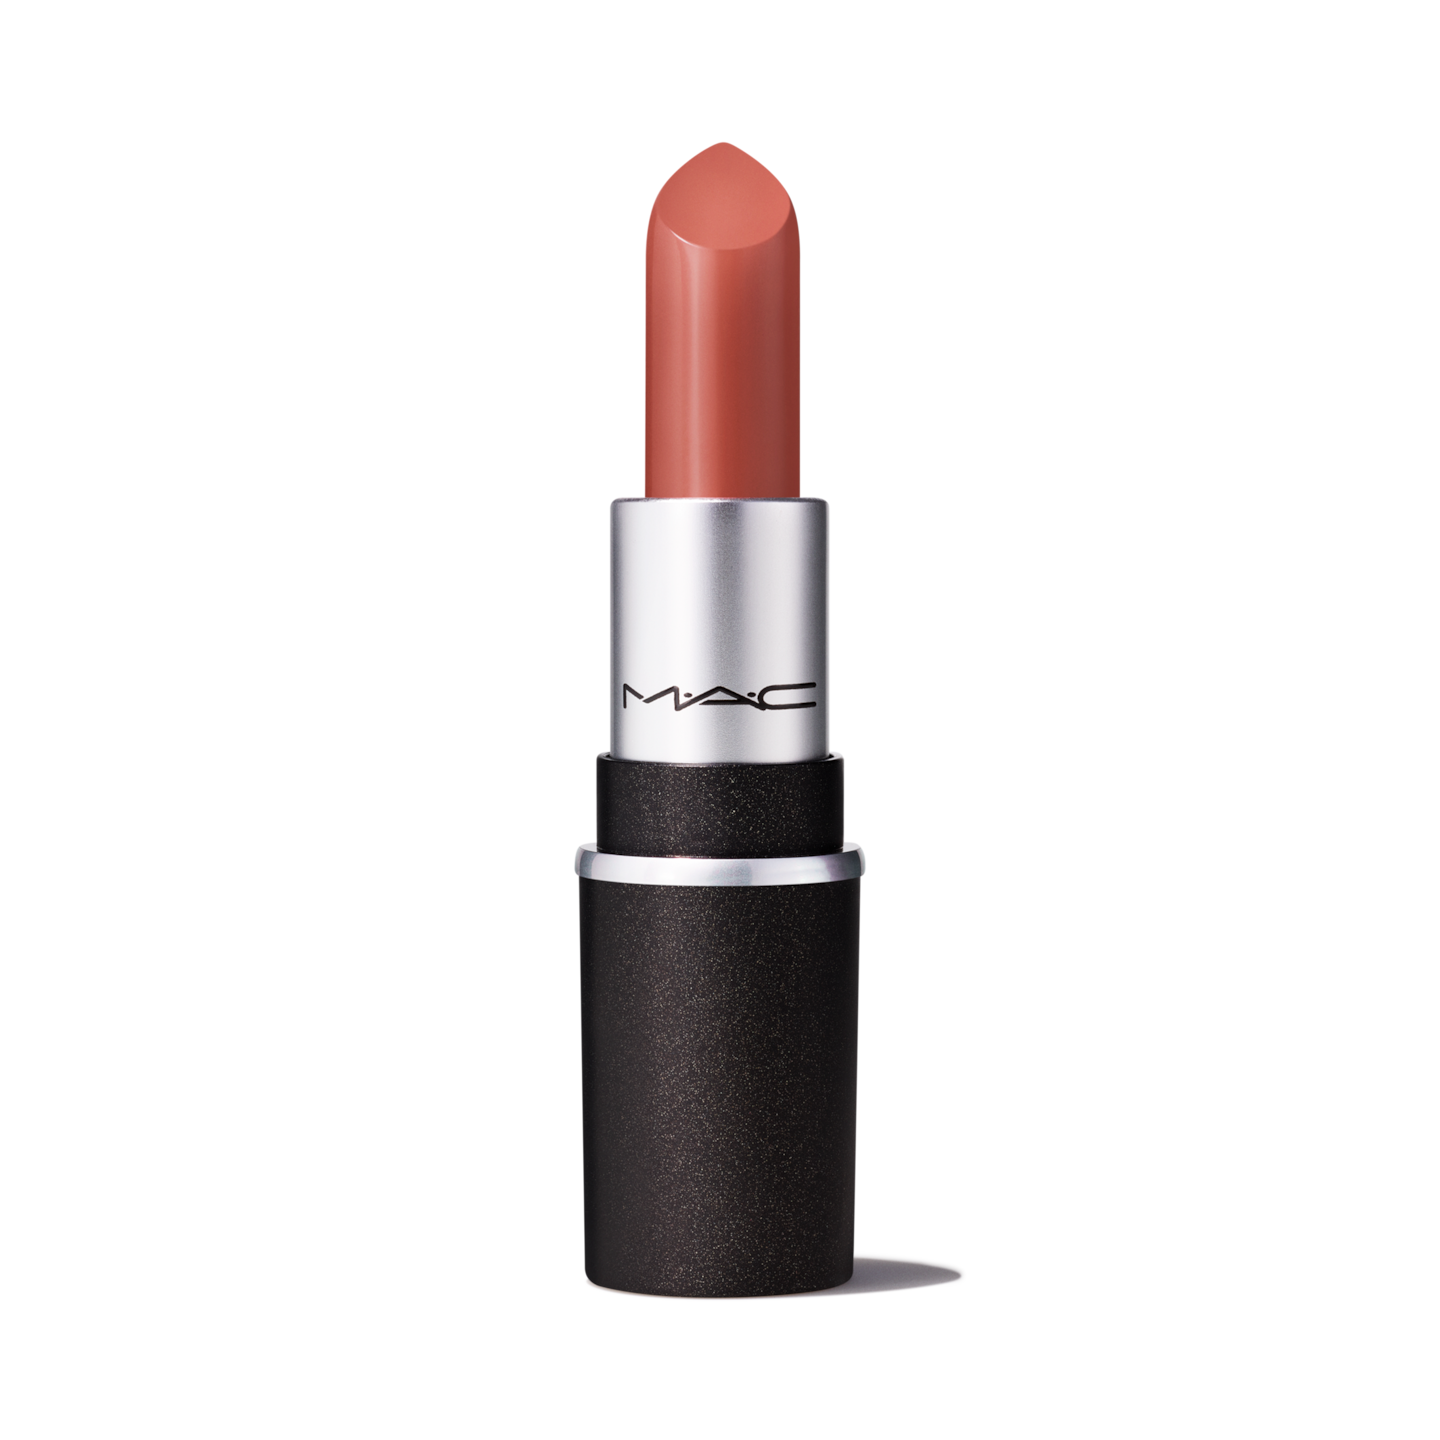 Negen Besnoeiing Ziek persoon Mini MAC Travel Size Lipstick | Including Ruby Woo & Velvet Teddy Minis |  MAC Cosmetics - Official Site